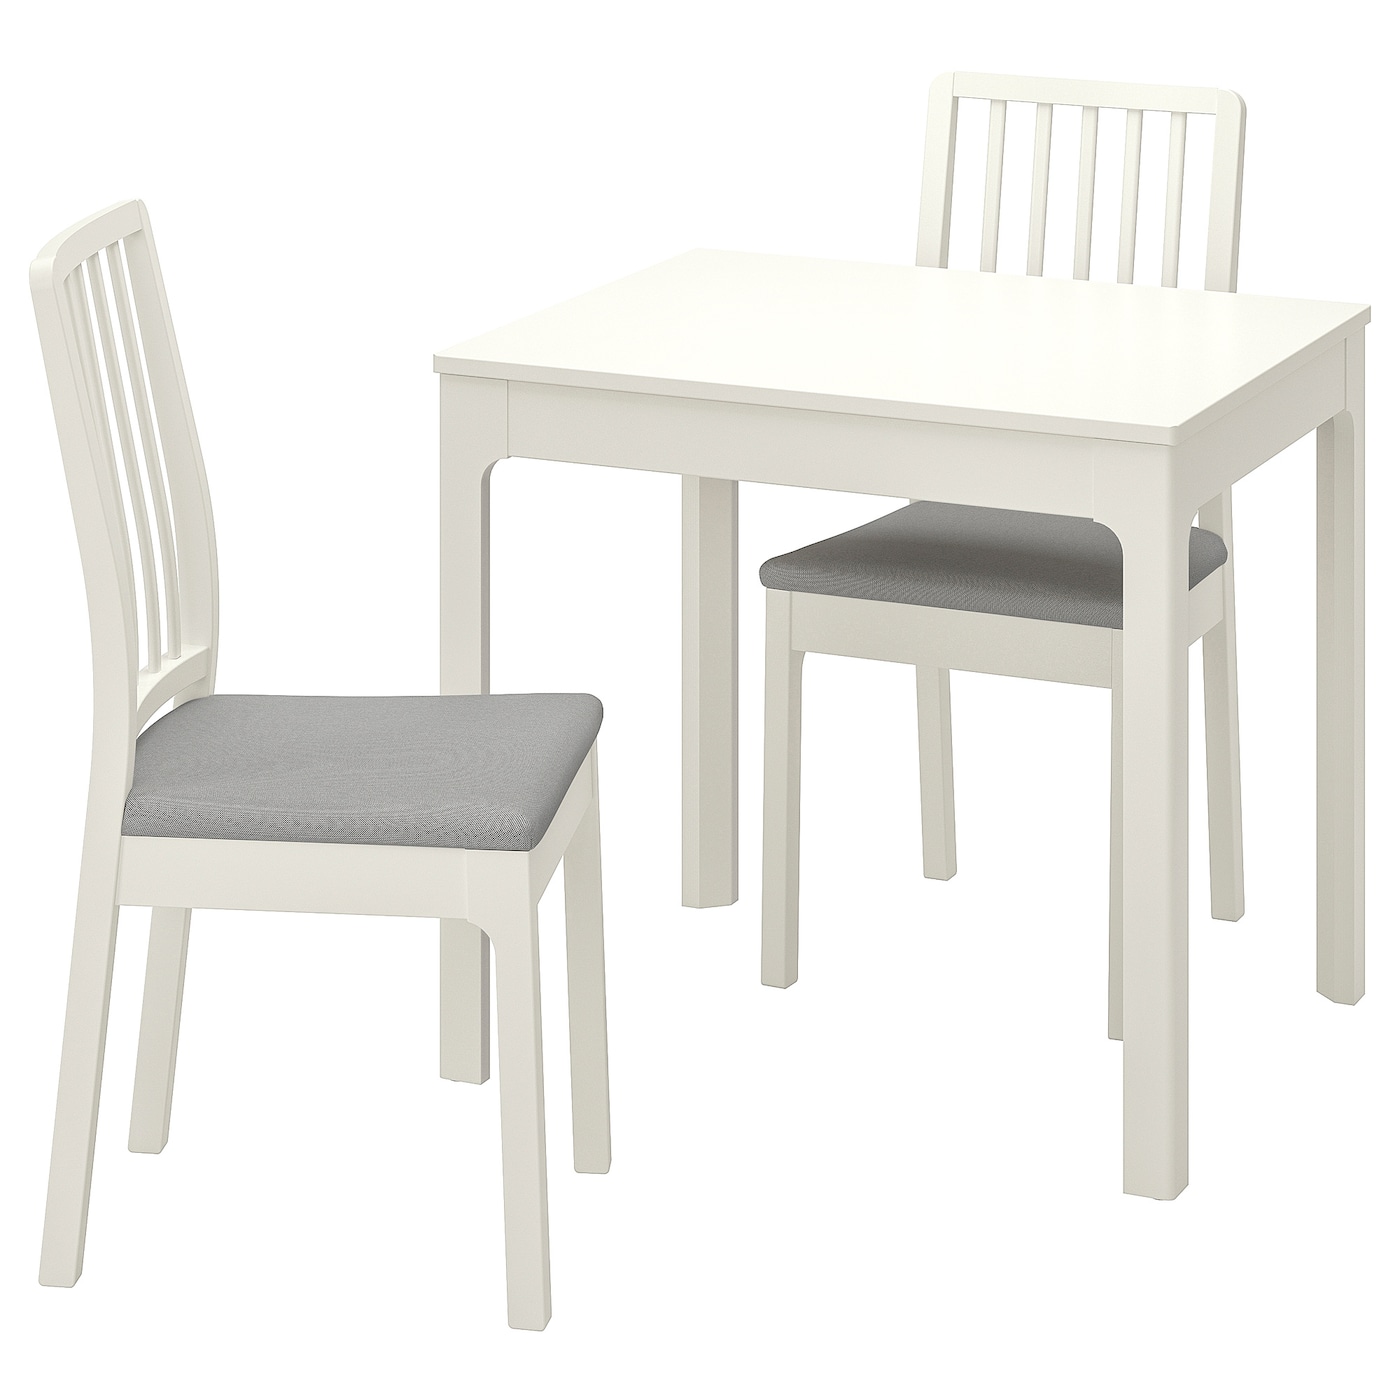 Стол и 2 стула - IKEA EKEDALEN/ЭКЕДАЛЕН ИКЕА,120х80 см,  белый/серый